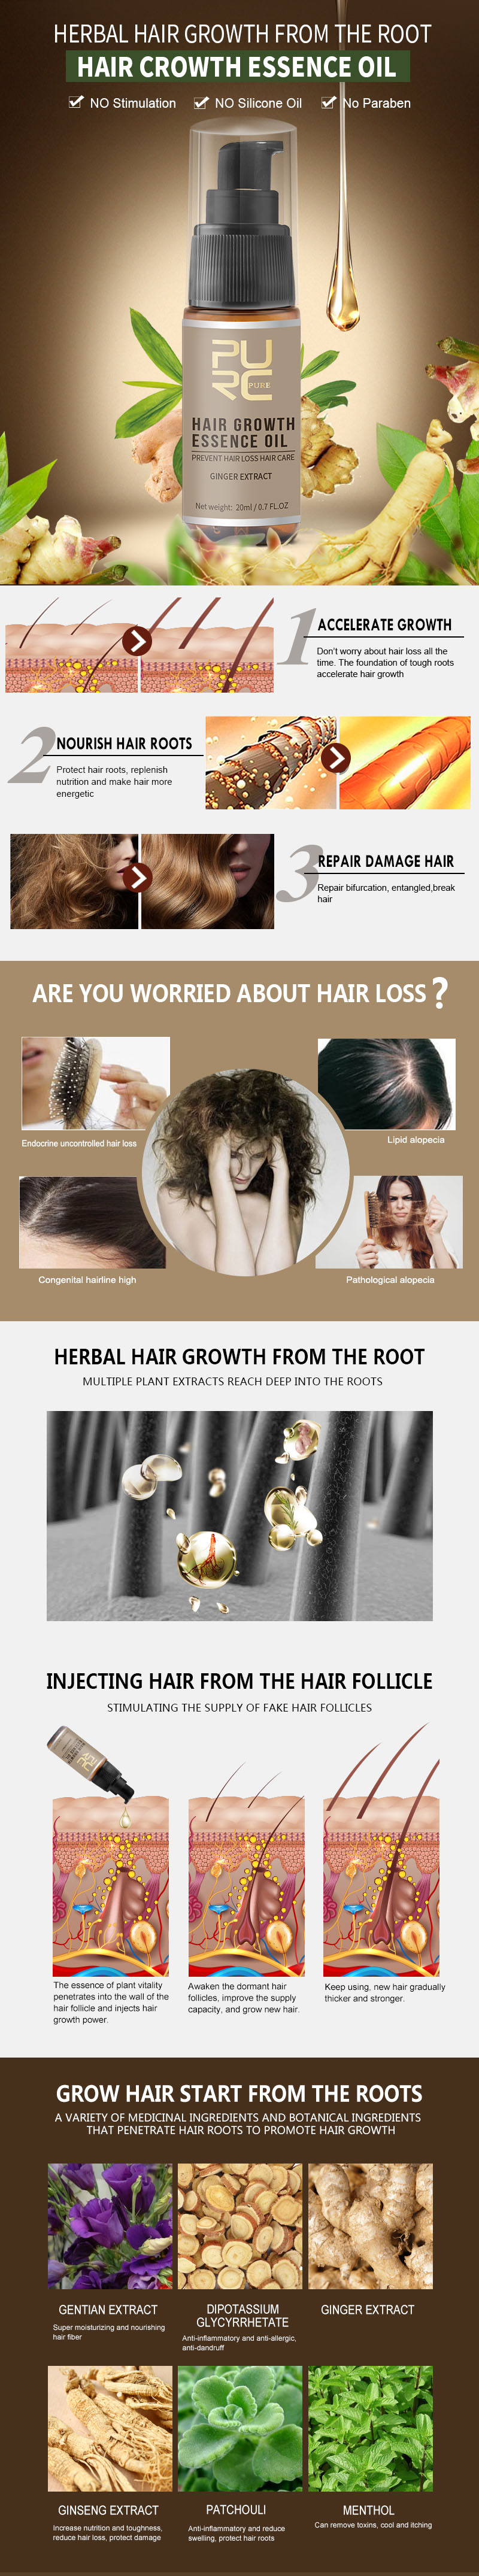 PURC Hot sale Fast Hair Growth Essence Oil Hair Loss Treatment Help for hair Growth Hair Care 20ml